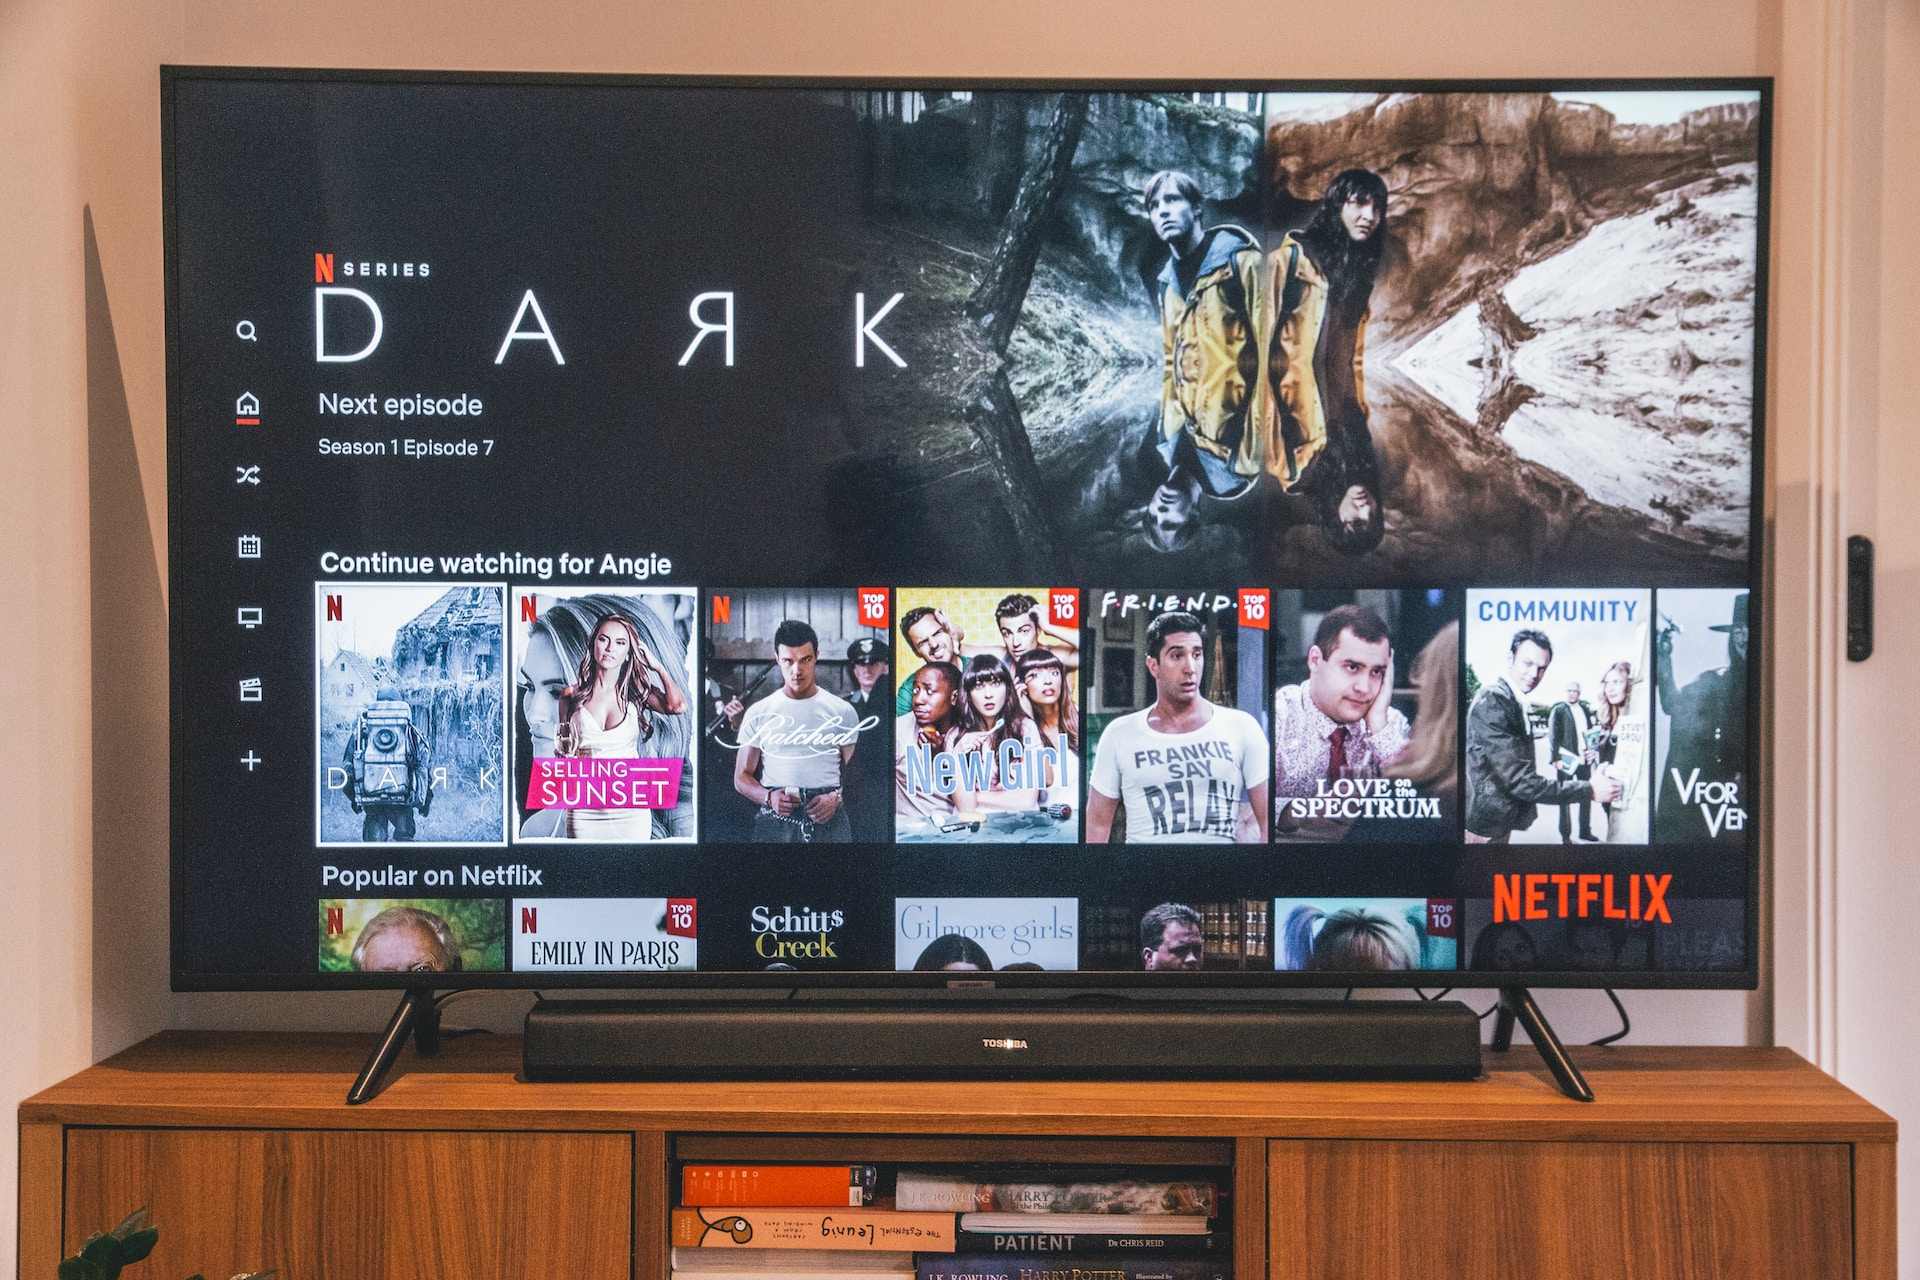 How Do You Reset Netflix On Sony Smart TV?